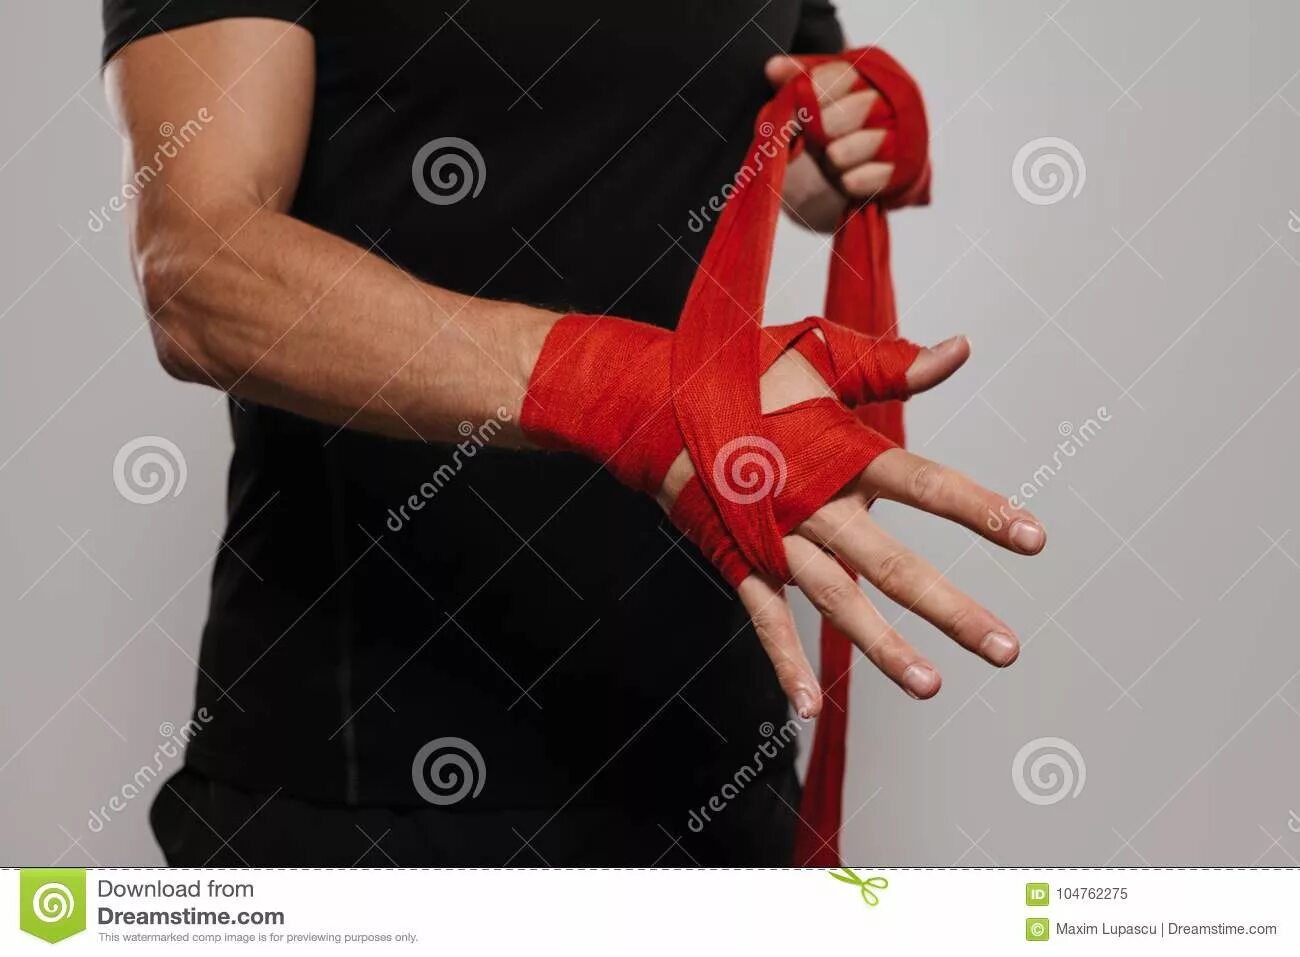 Боксерские бинты на руке.